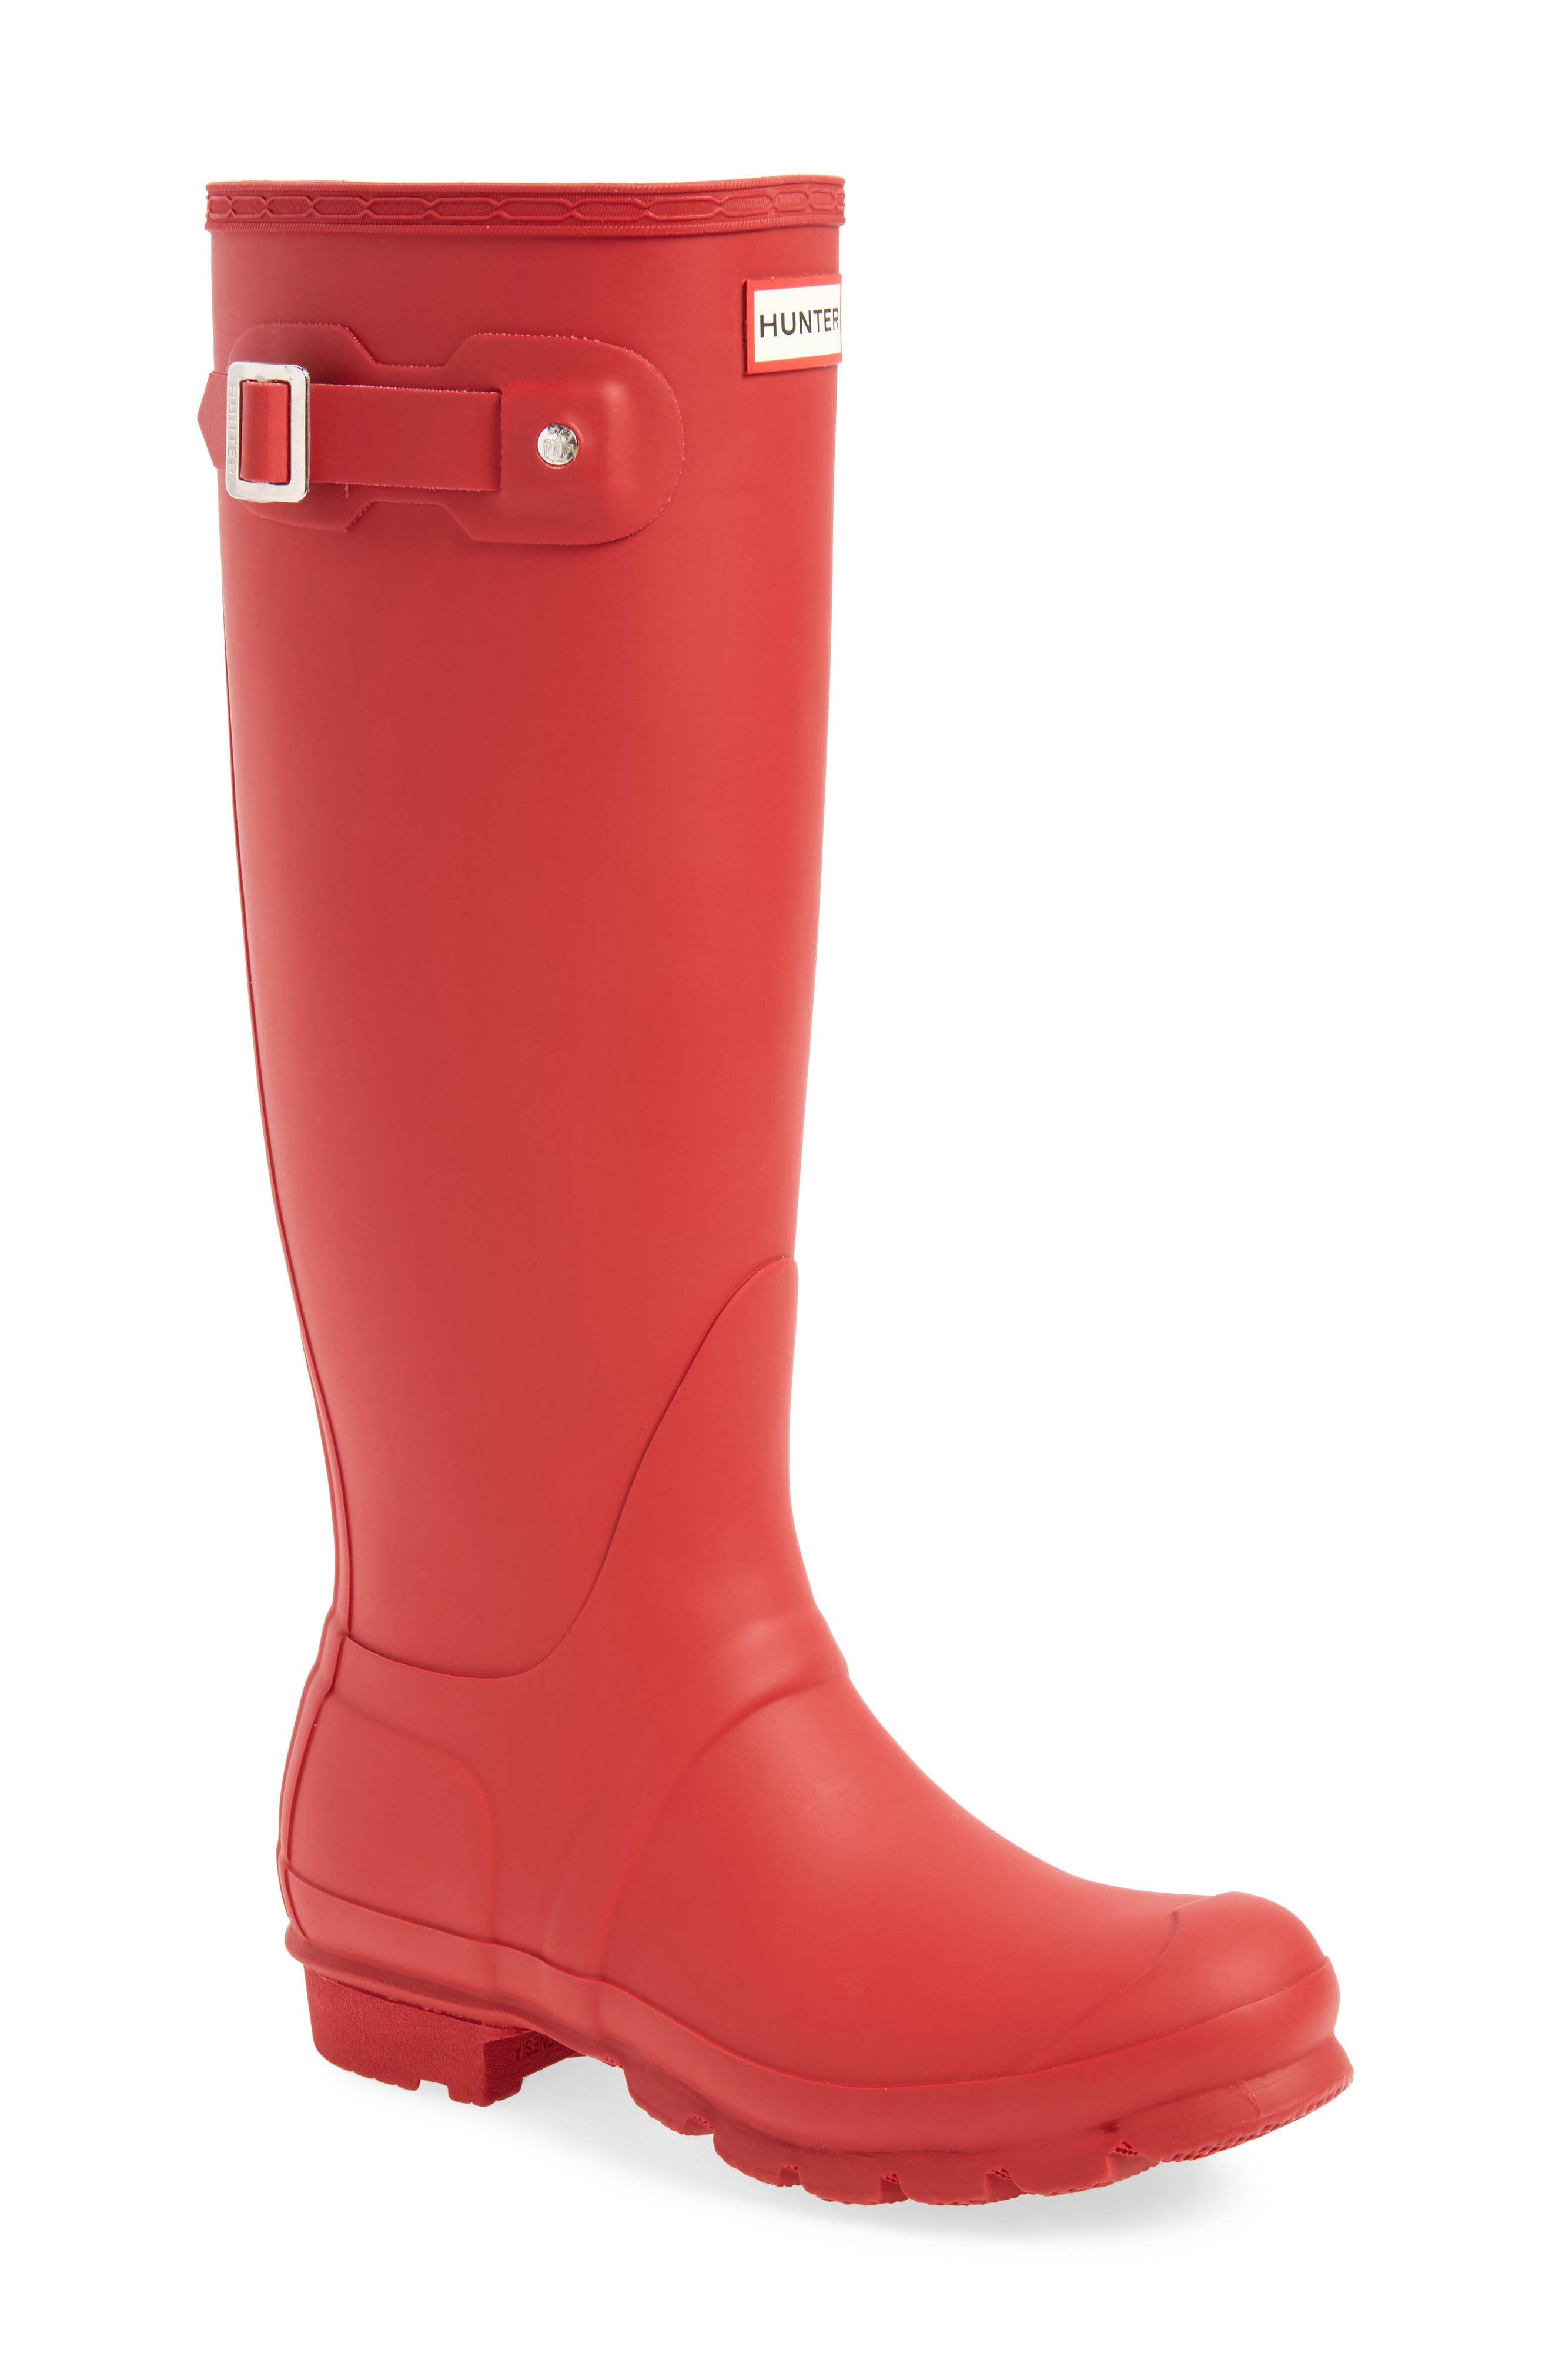 burberry rain boots womens pink